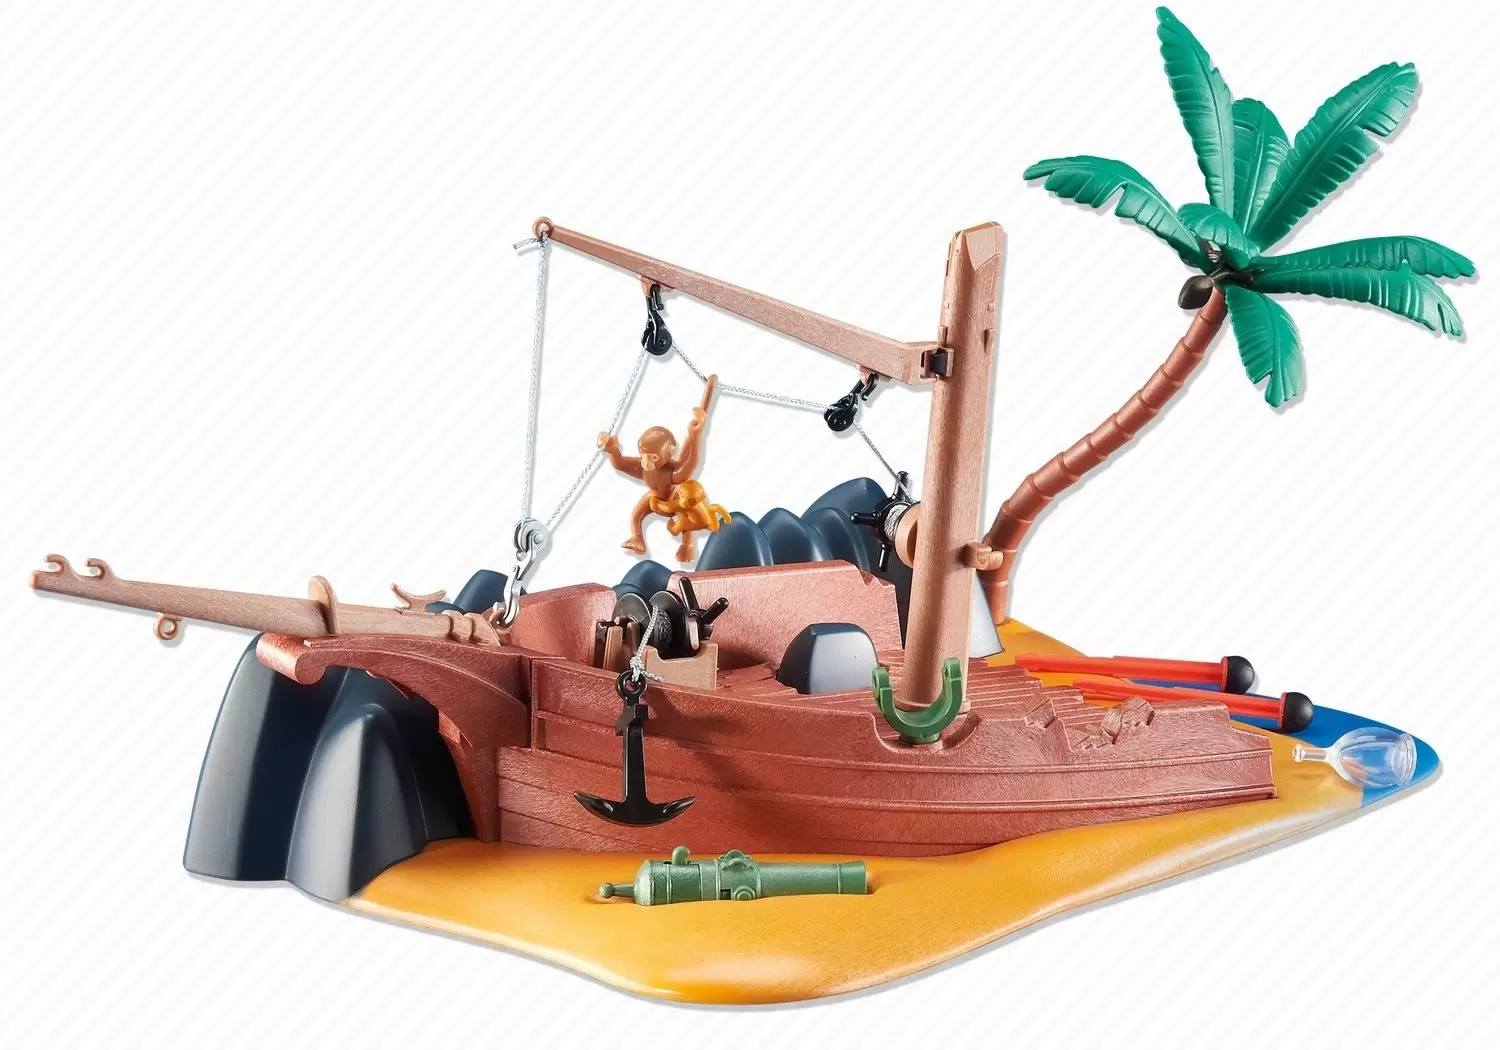 Pirate Playmobil - Beached Shipwreck